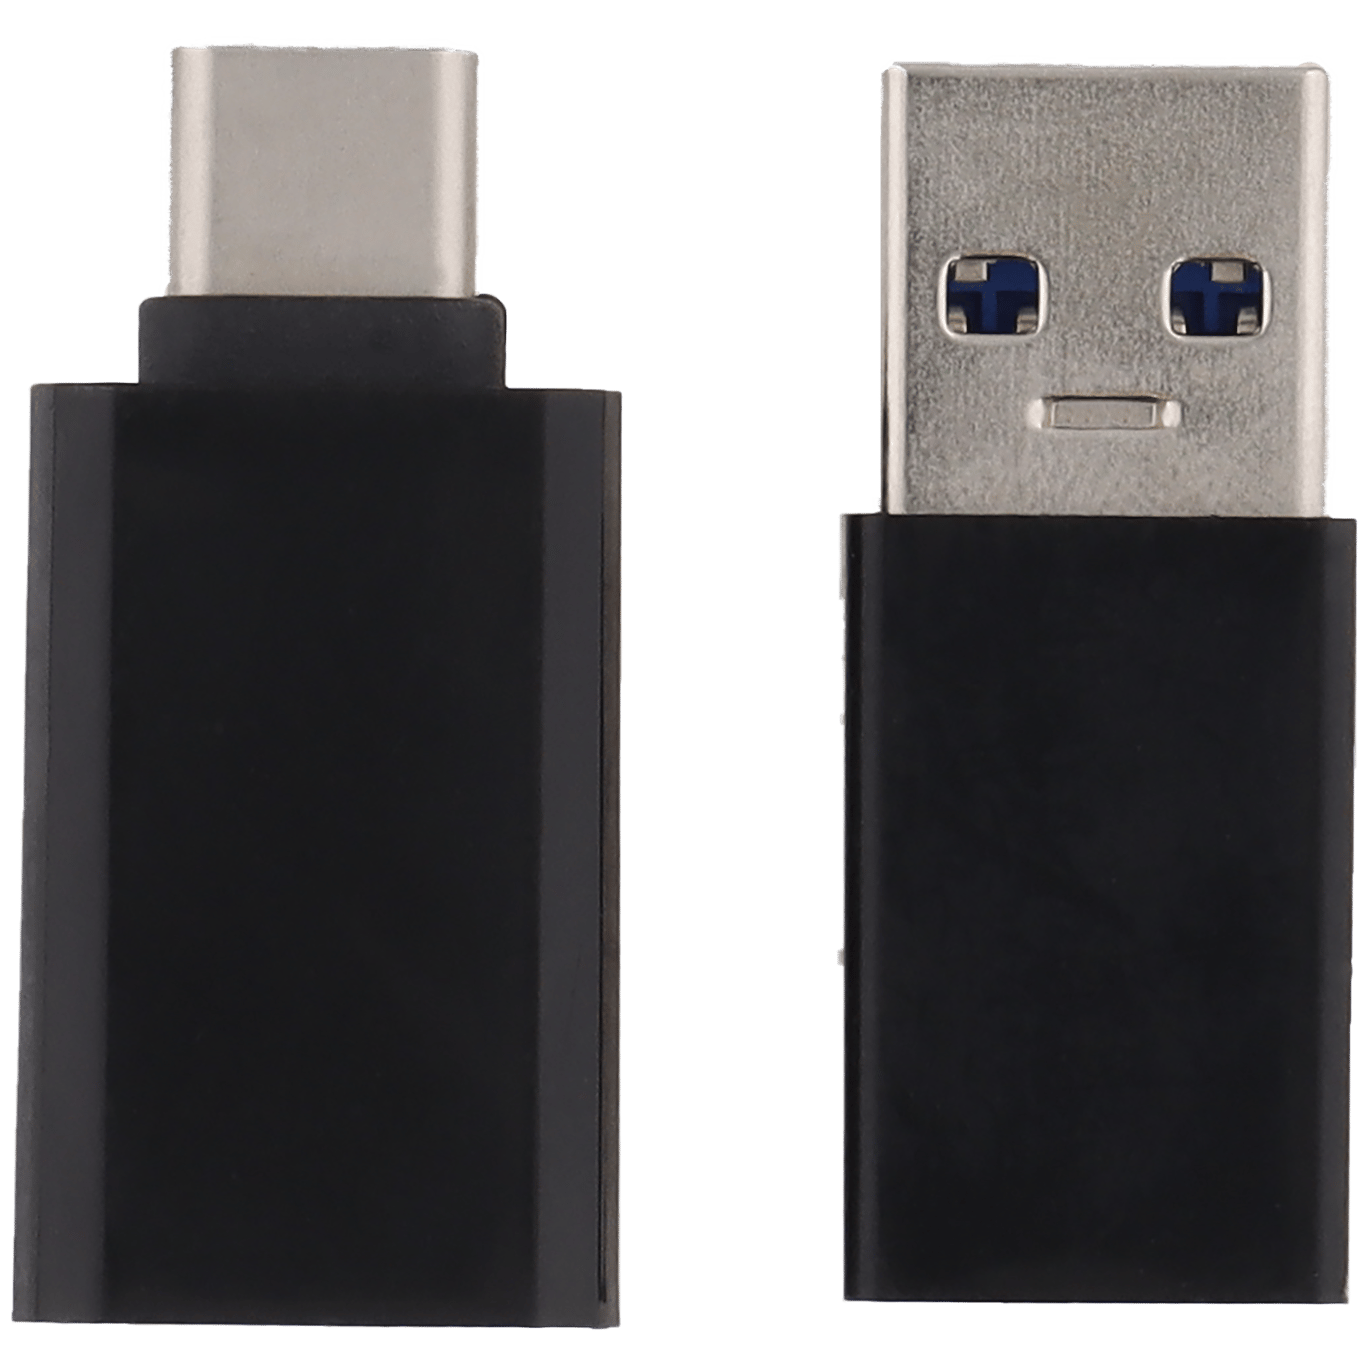 Set adaptateur USB type C Maxxter